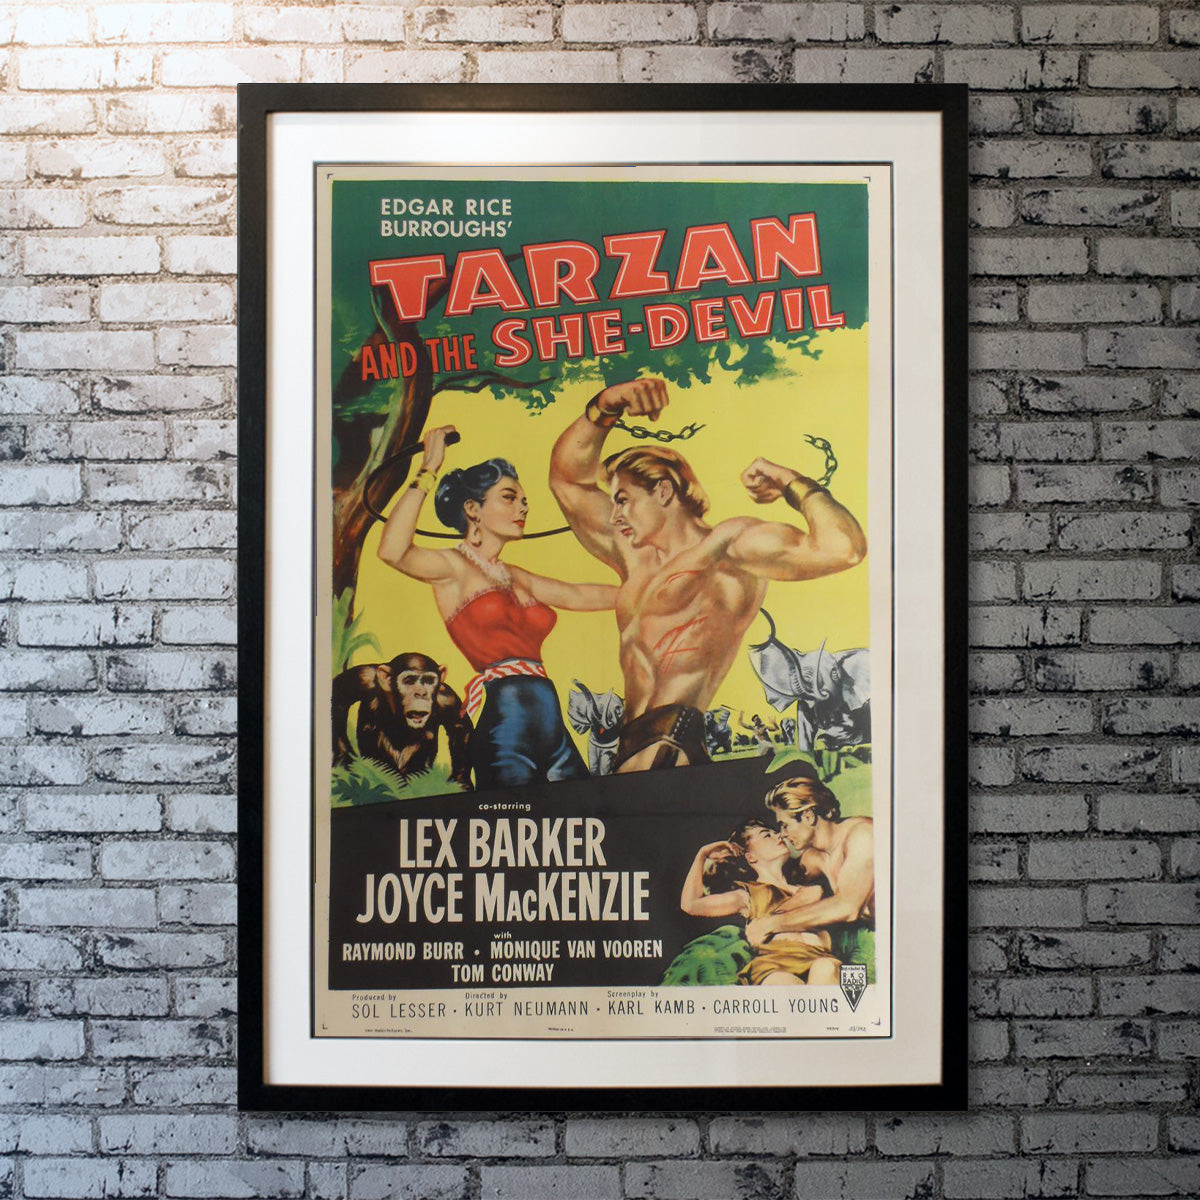 Original Movie Poster of Tarzan And The She-devil (1953)